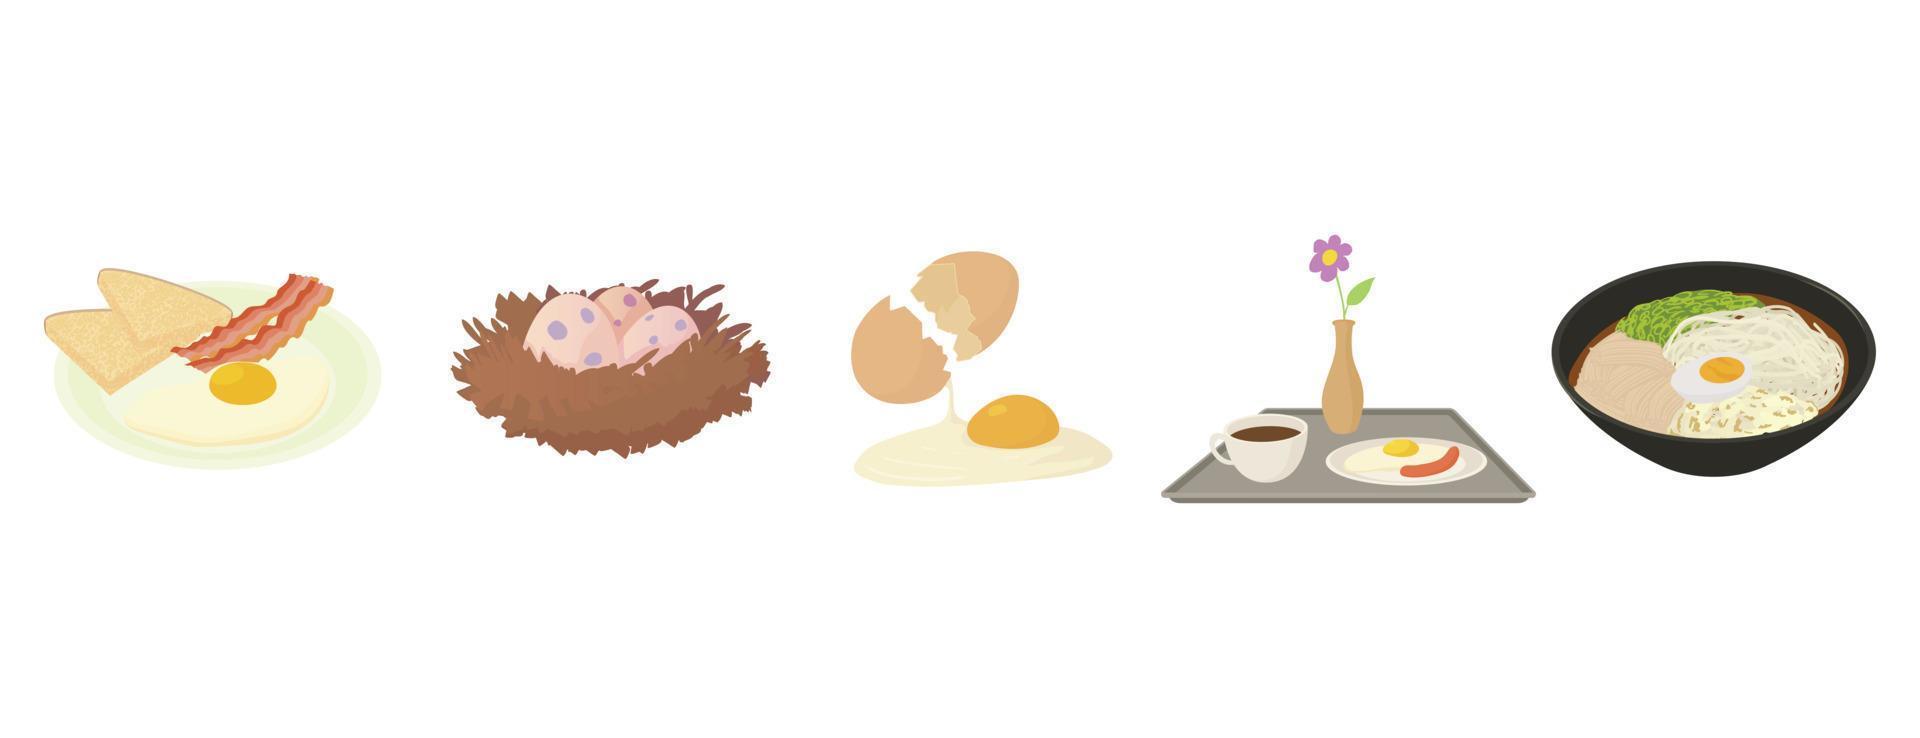 Egg food icon set, cartoon style vector